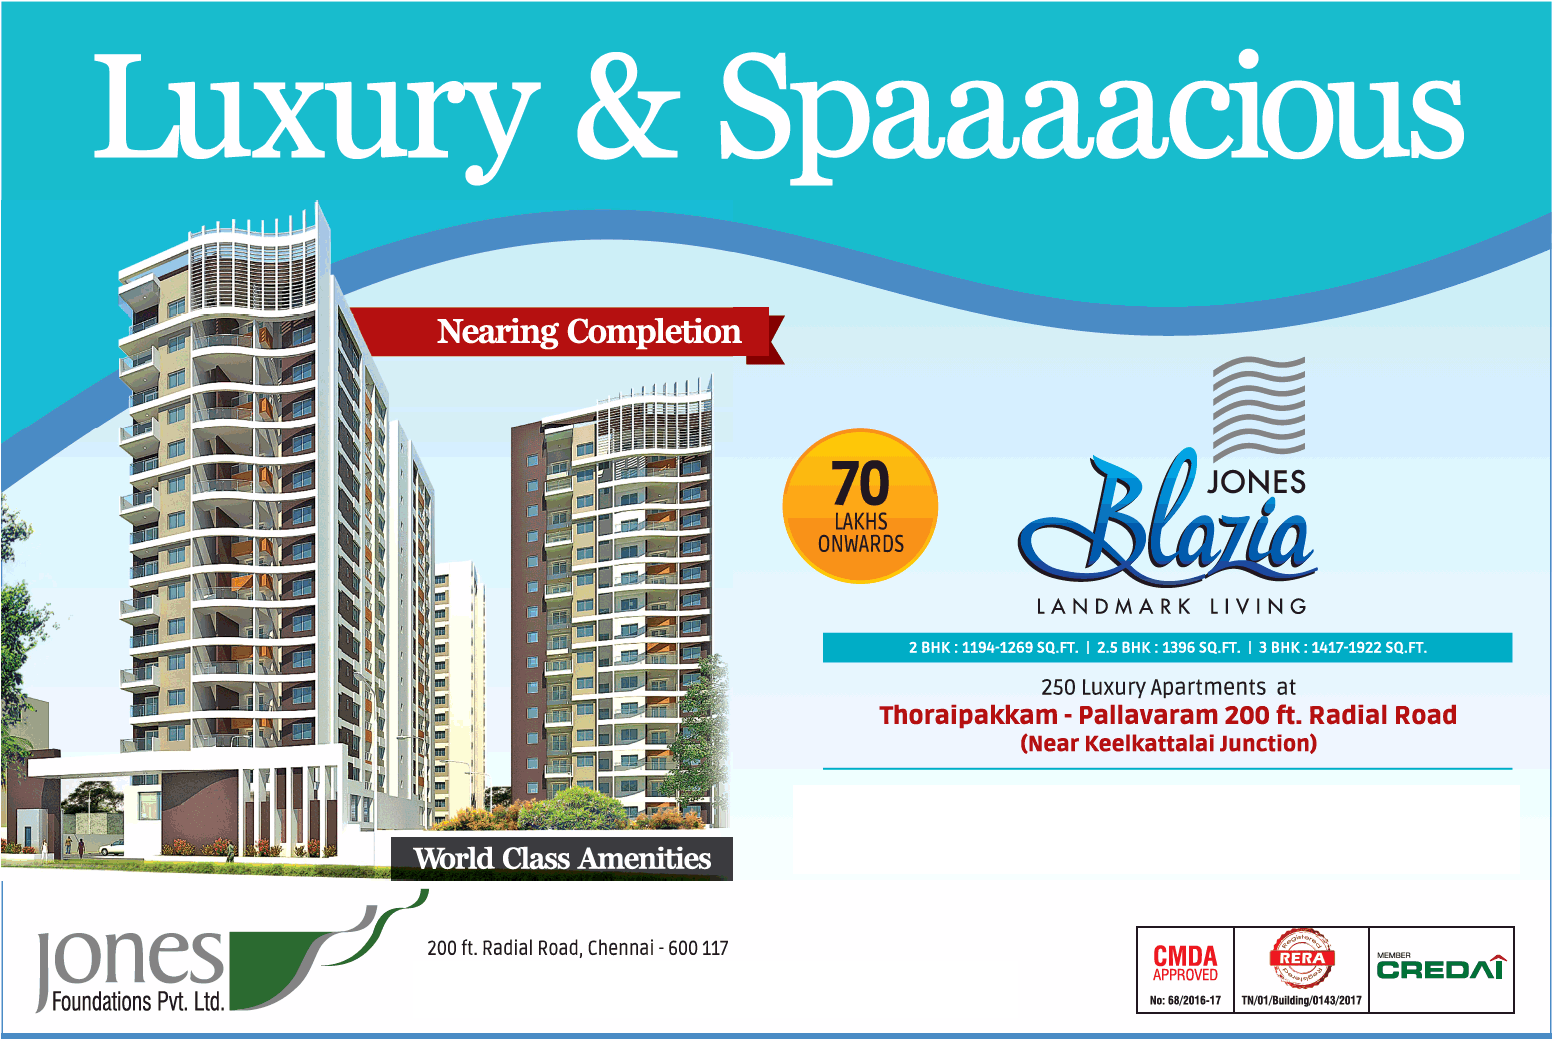 Presenting 250 luxury apartments at Jones Blazia in Chennai Update